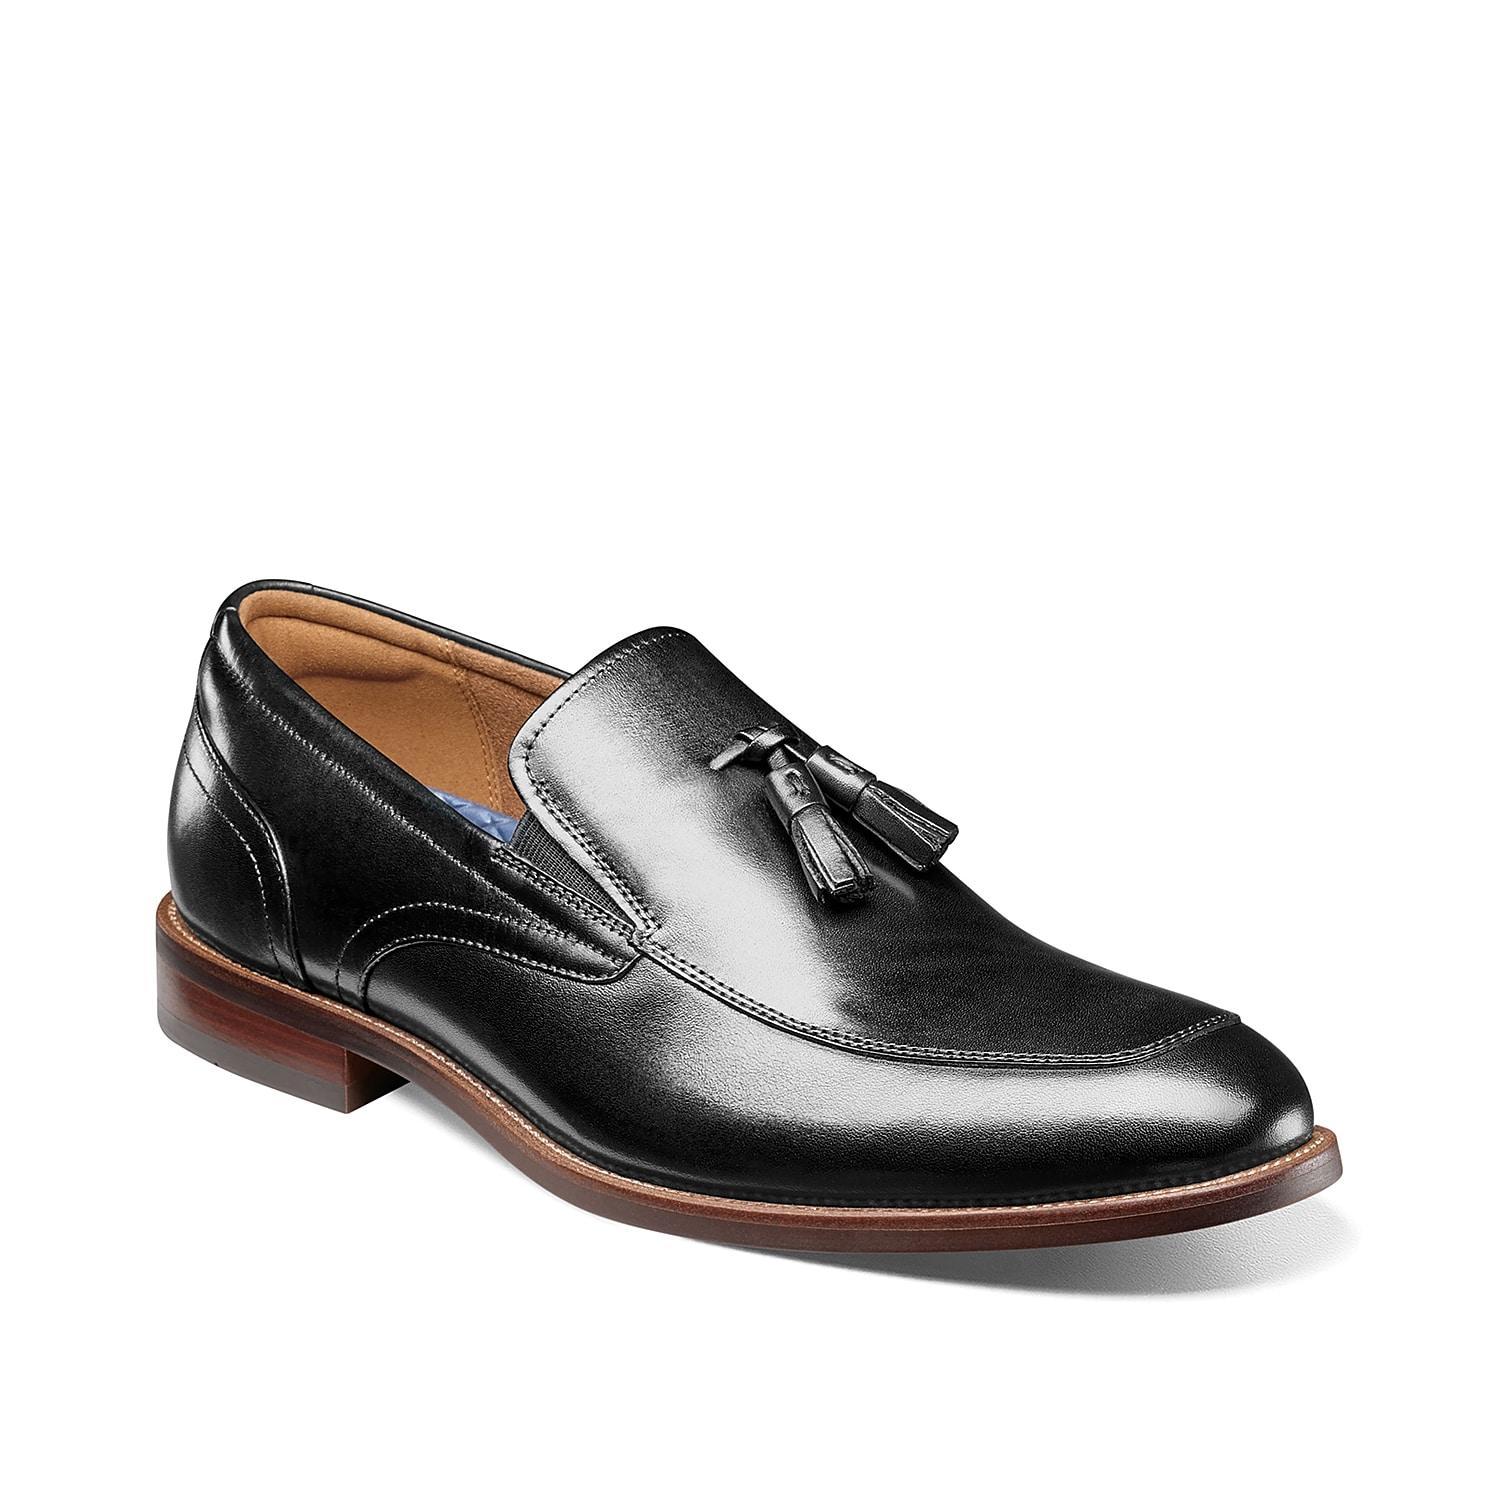 Magnanni Palmer (Black) Men's Shoes Product Image